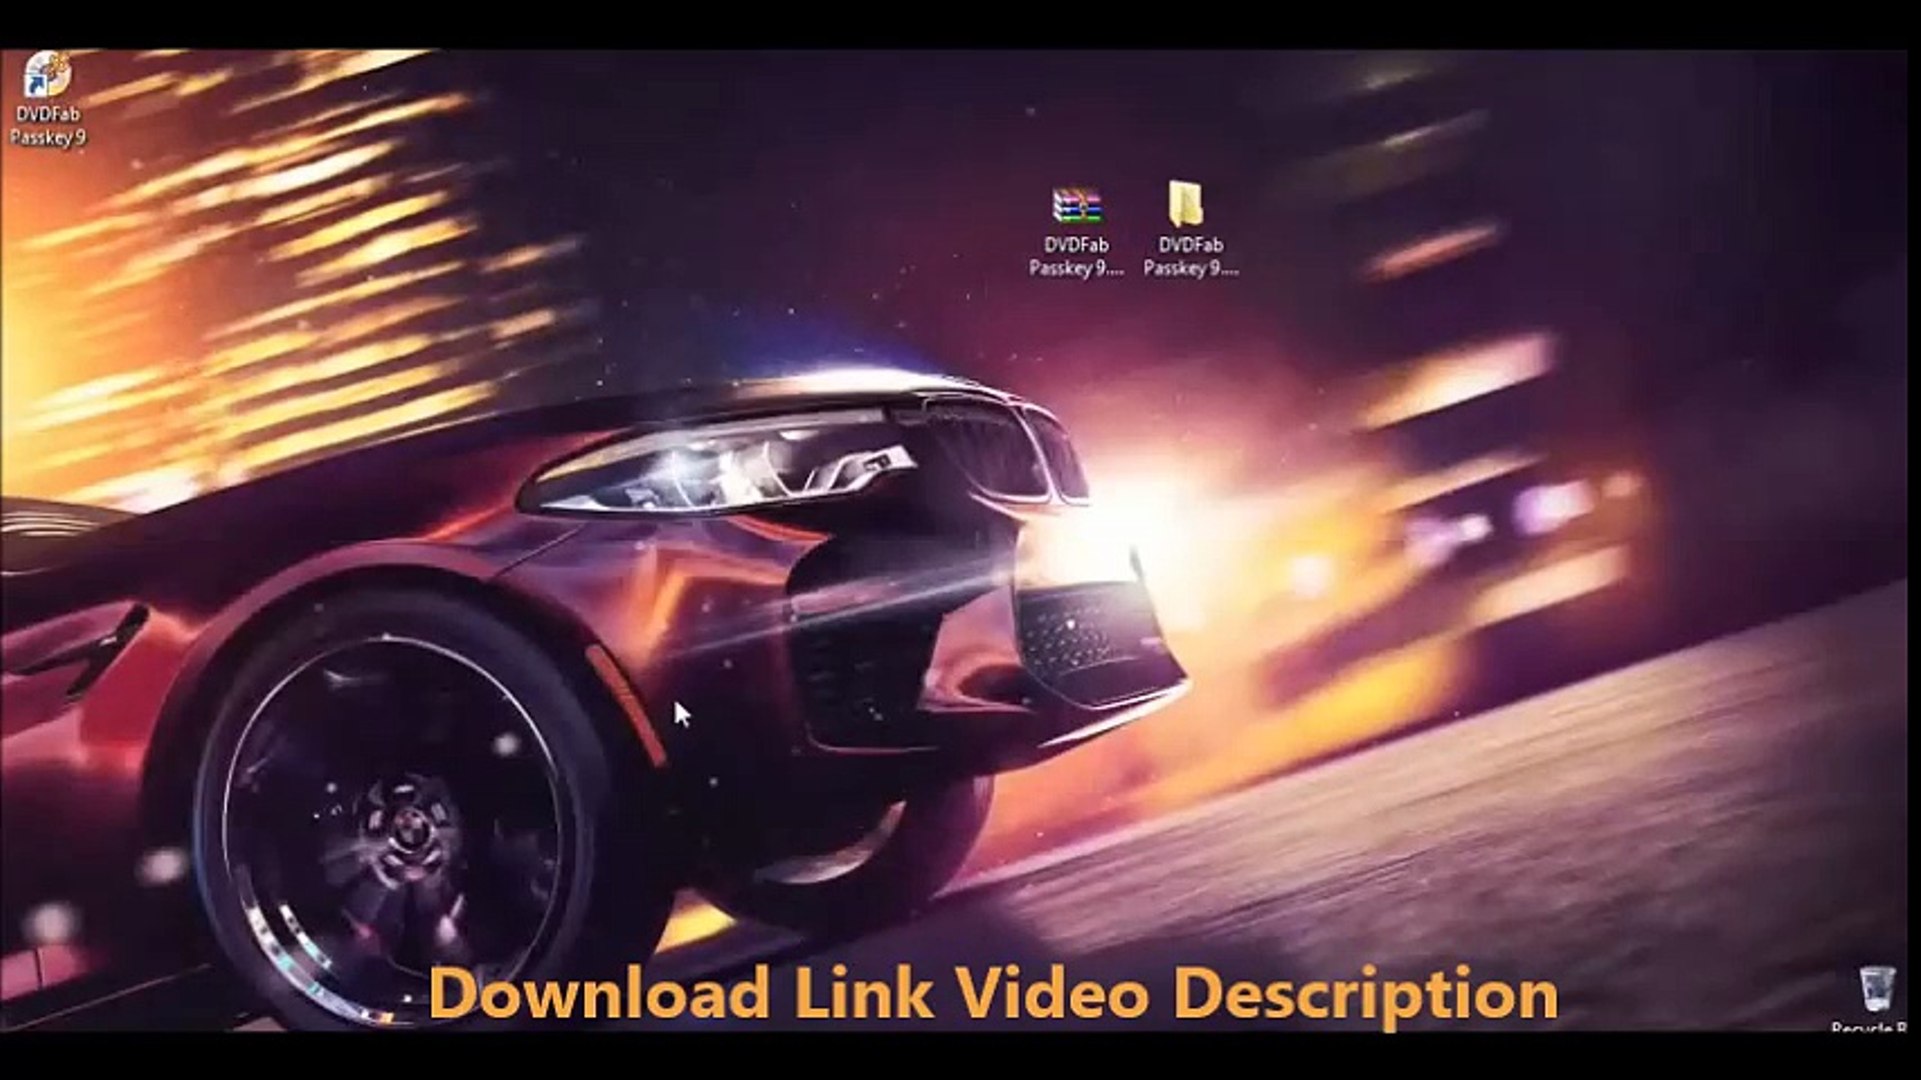 DVDFab Passkey Lite 9.3.1.4 Serial Key - video Dailymotion